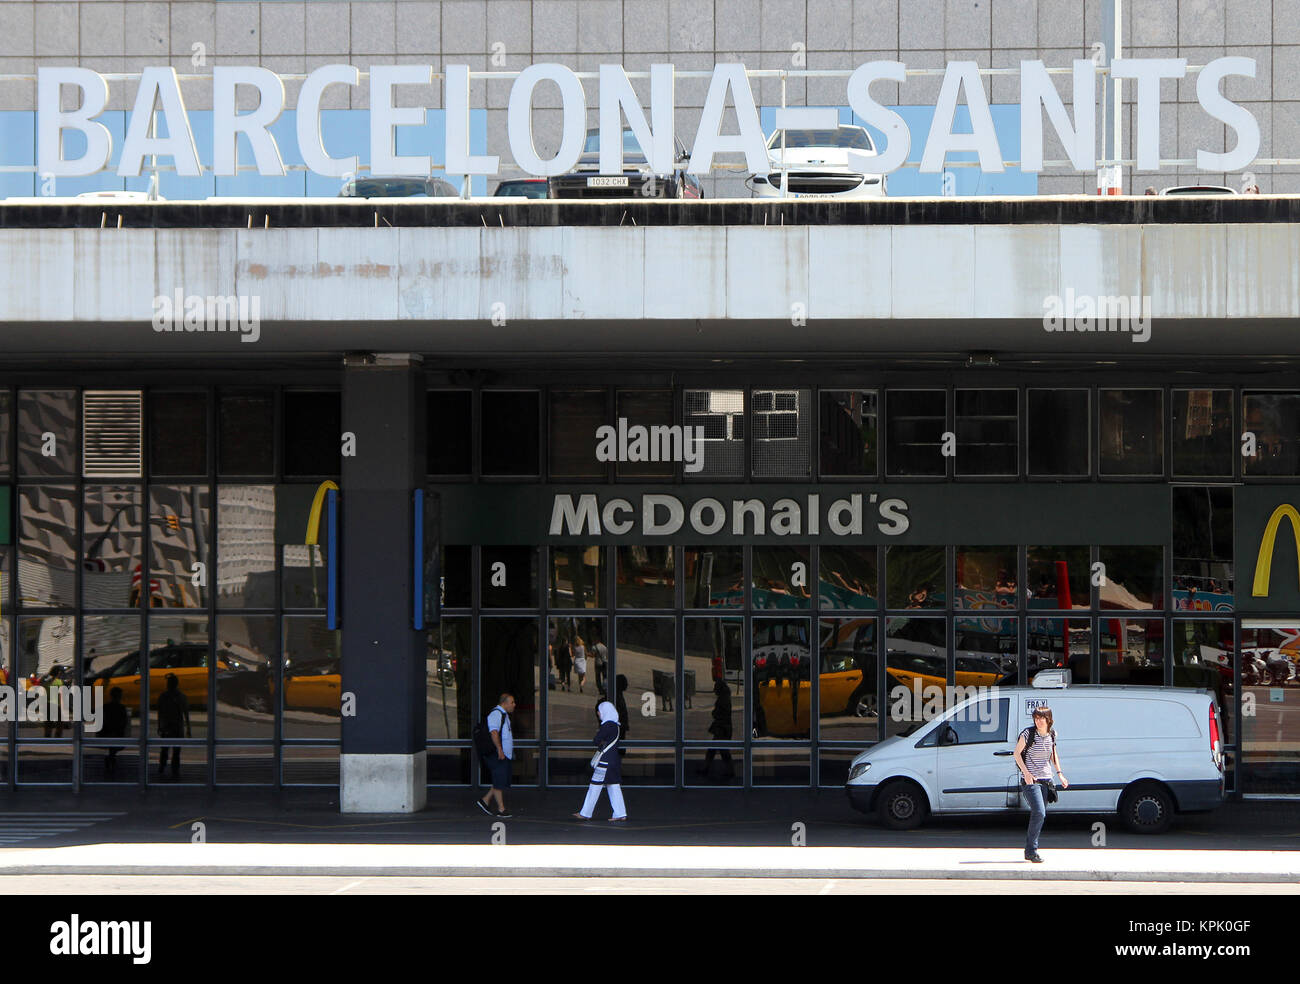 Barcelona Sants, main railway station with Mc Donald's below, Barcelona, Spain. Stock Photo